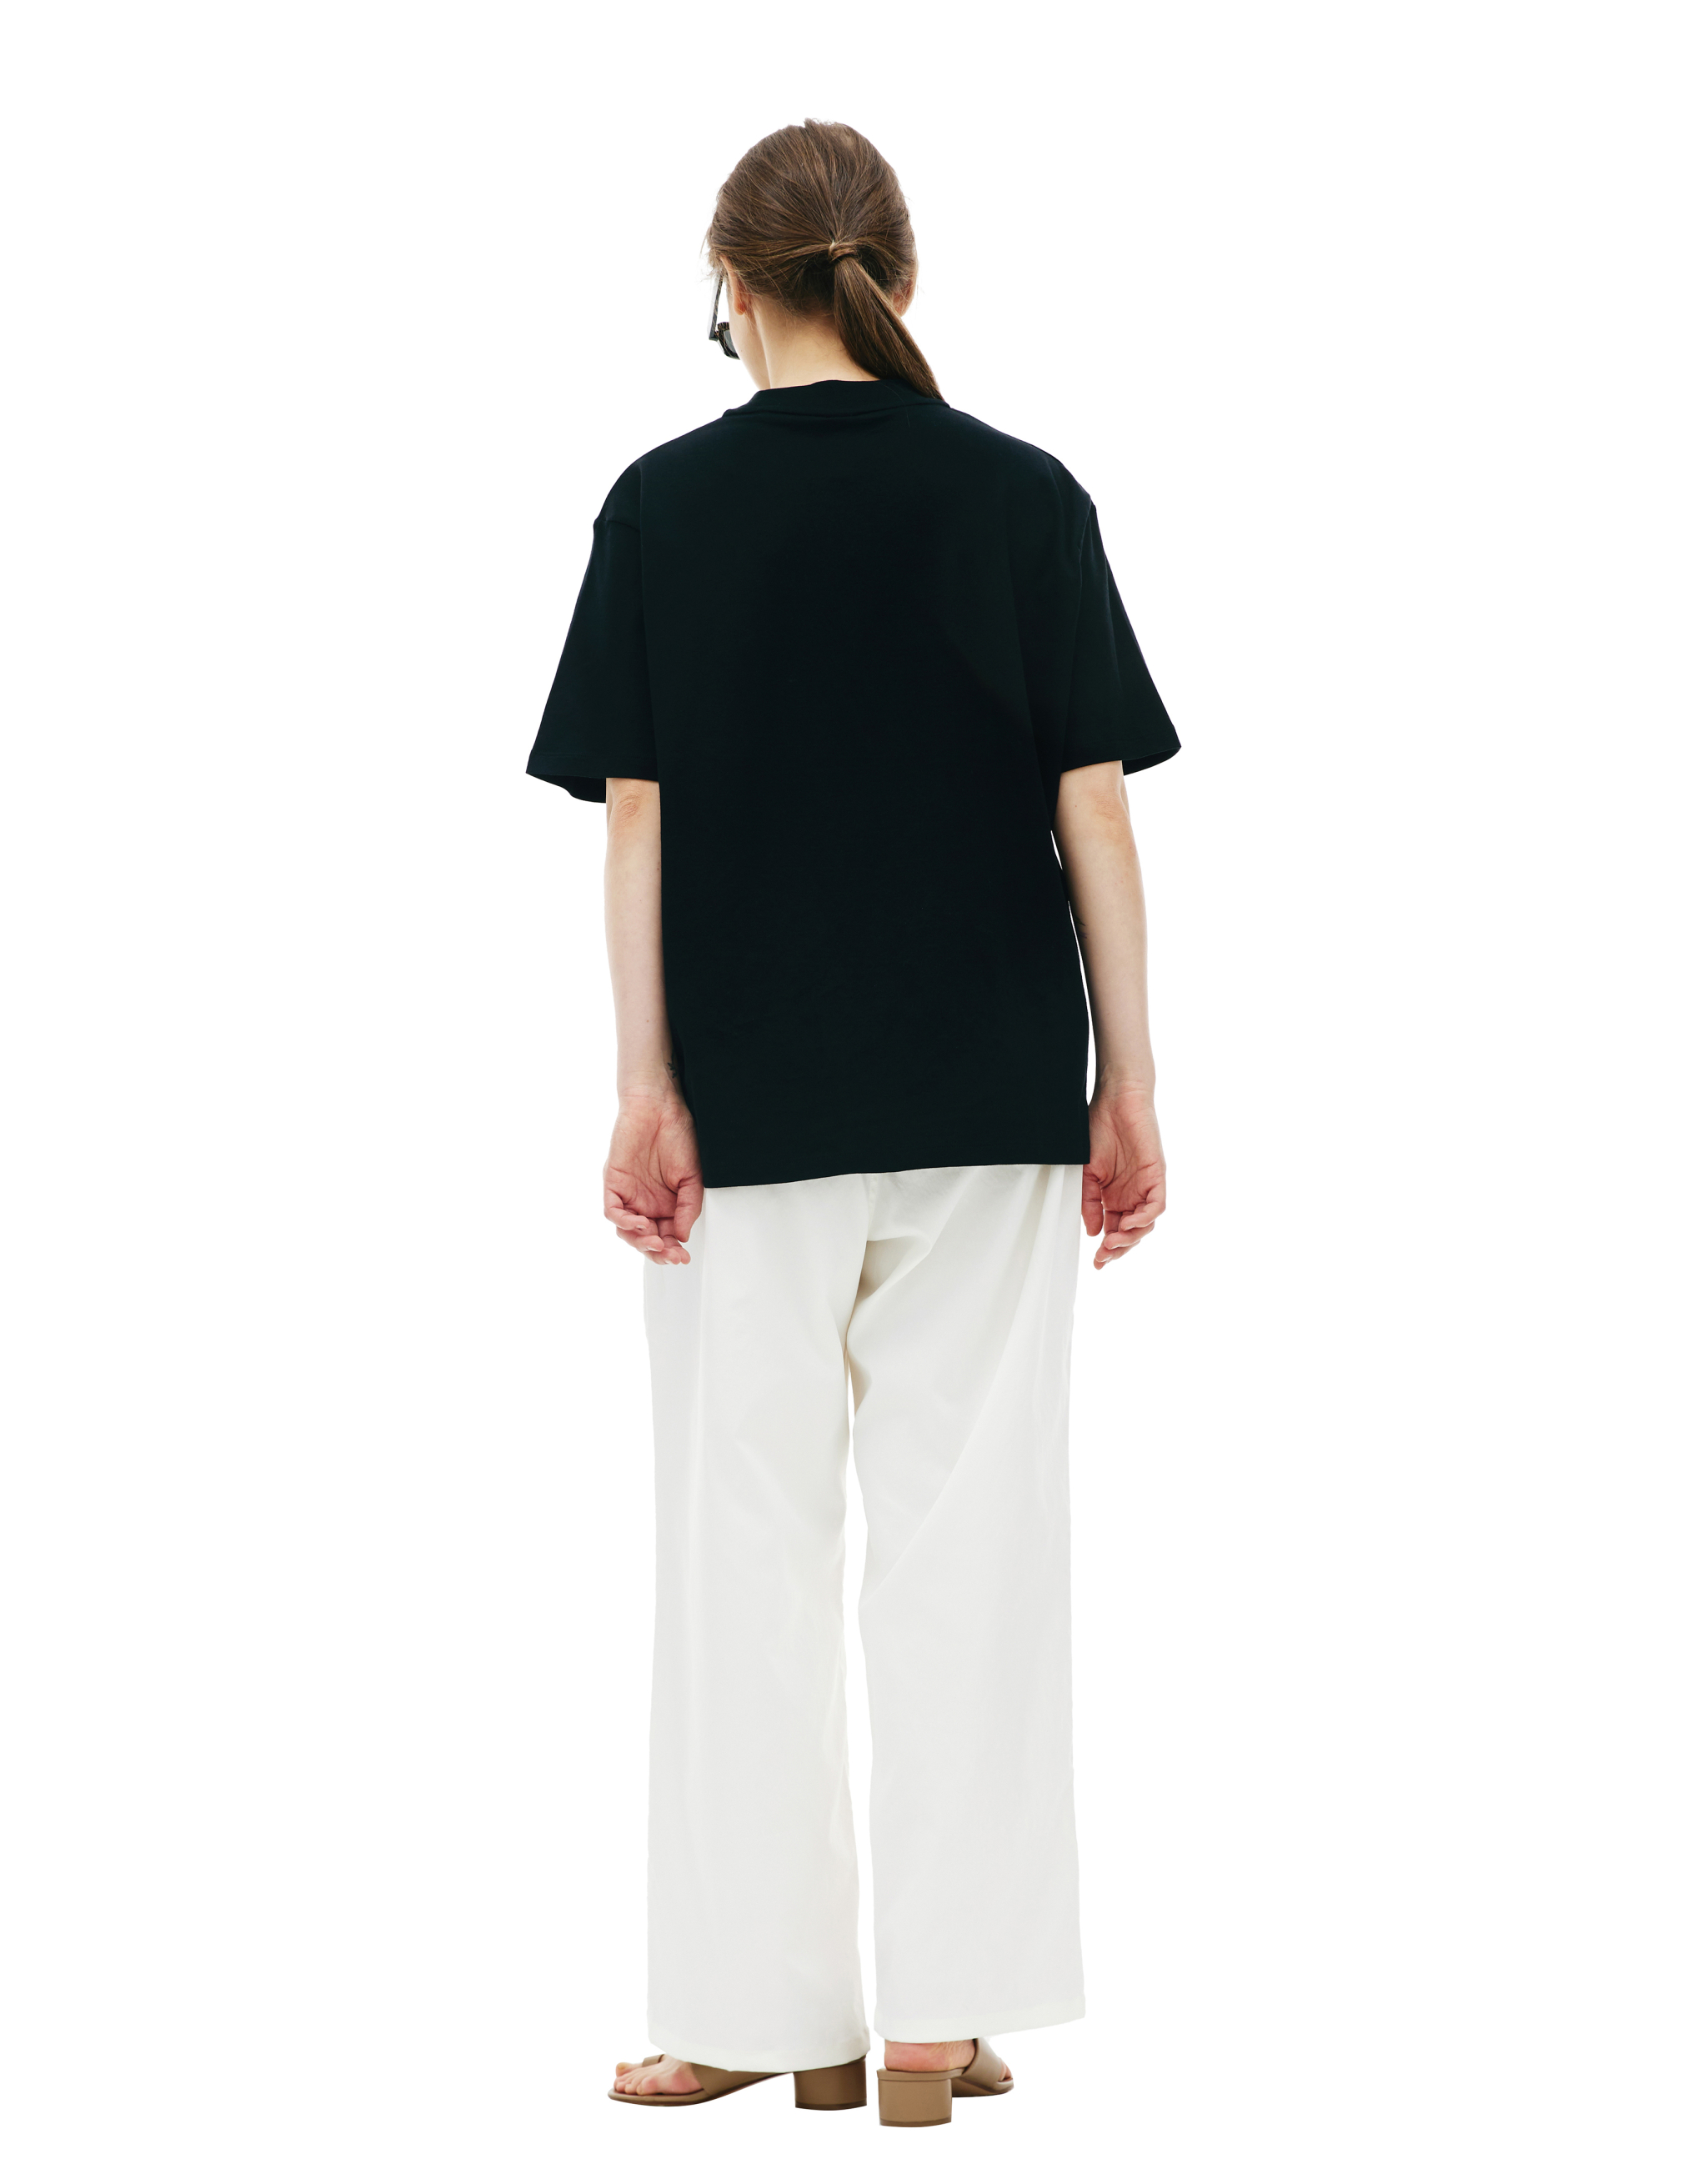 Черная футболка из хлопка KIMMY SS23-10/BLACK, размер M;L SS23-10/BLACK - фото 3